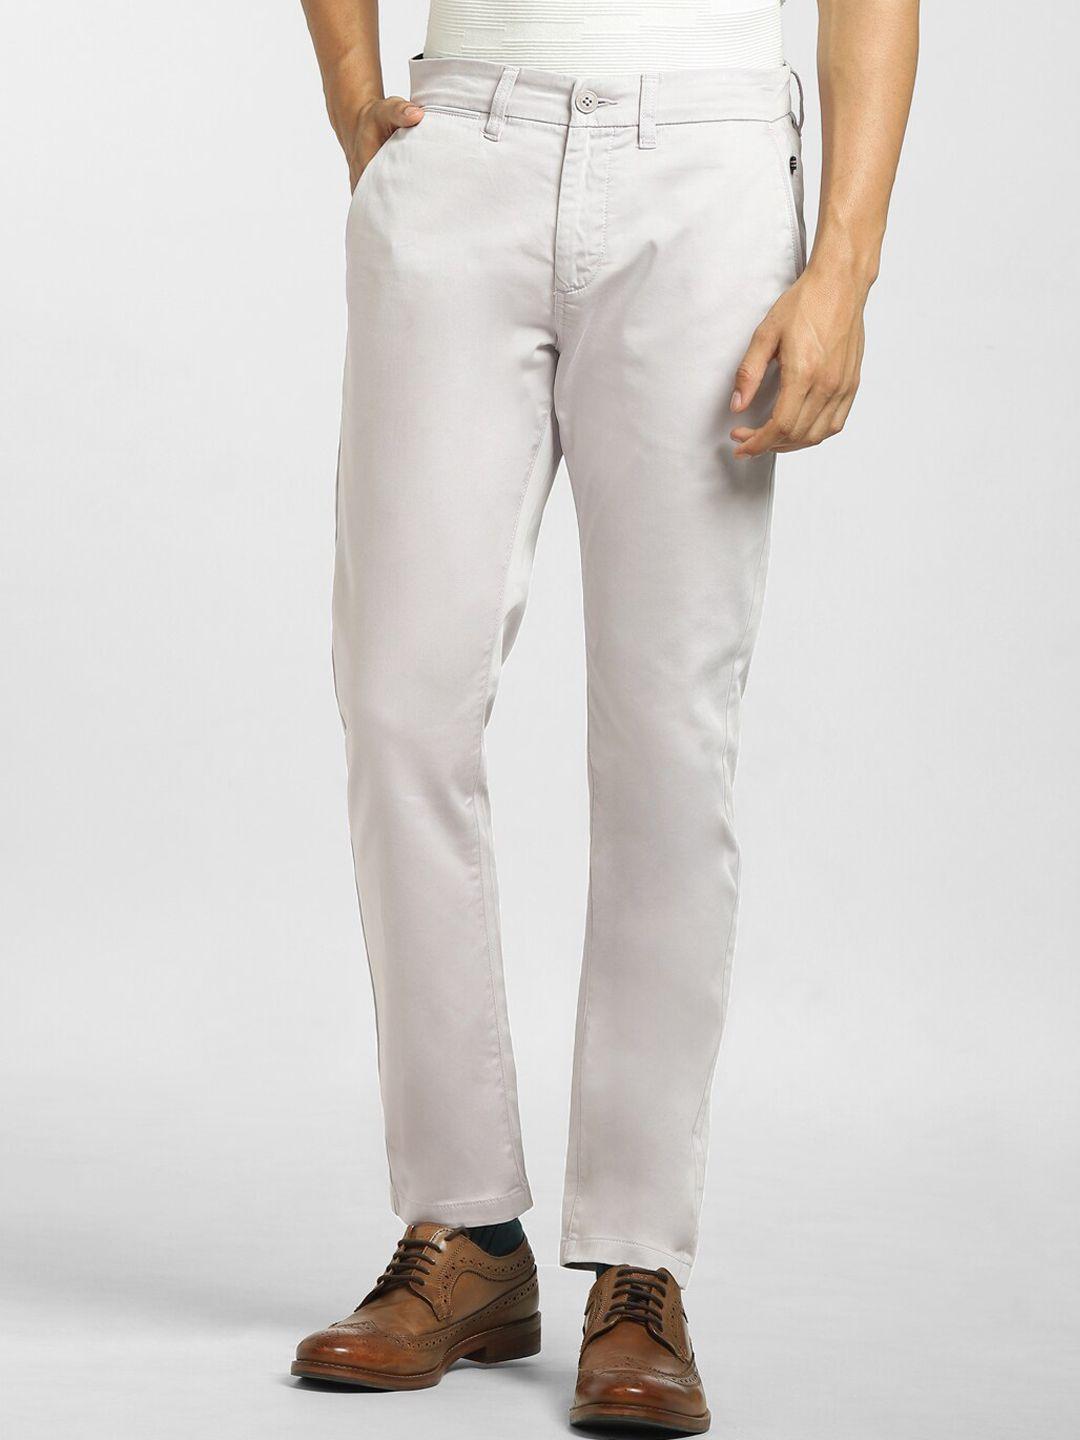 jack-&-jones-men-cream-coloured-chinos-trousers